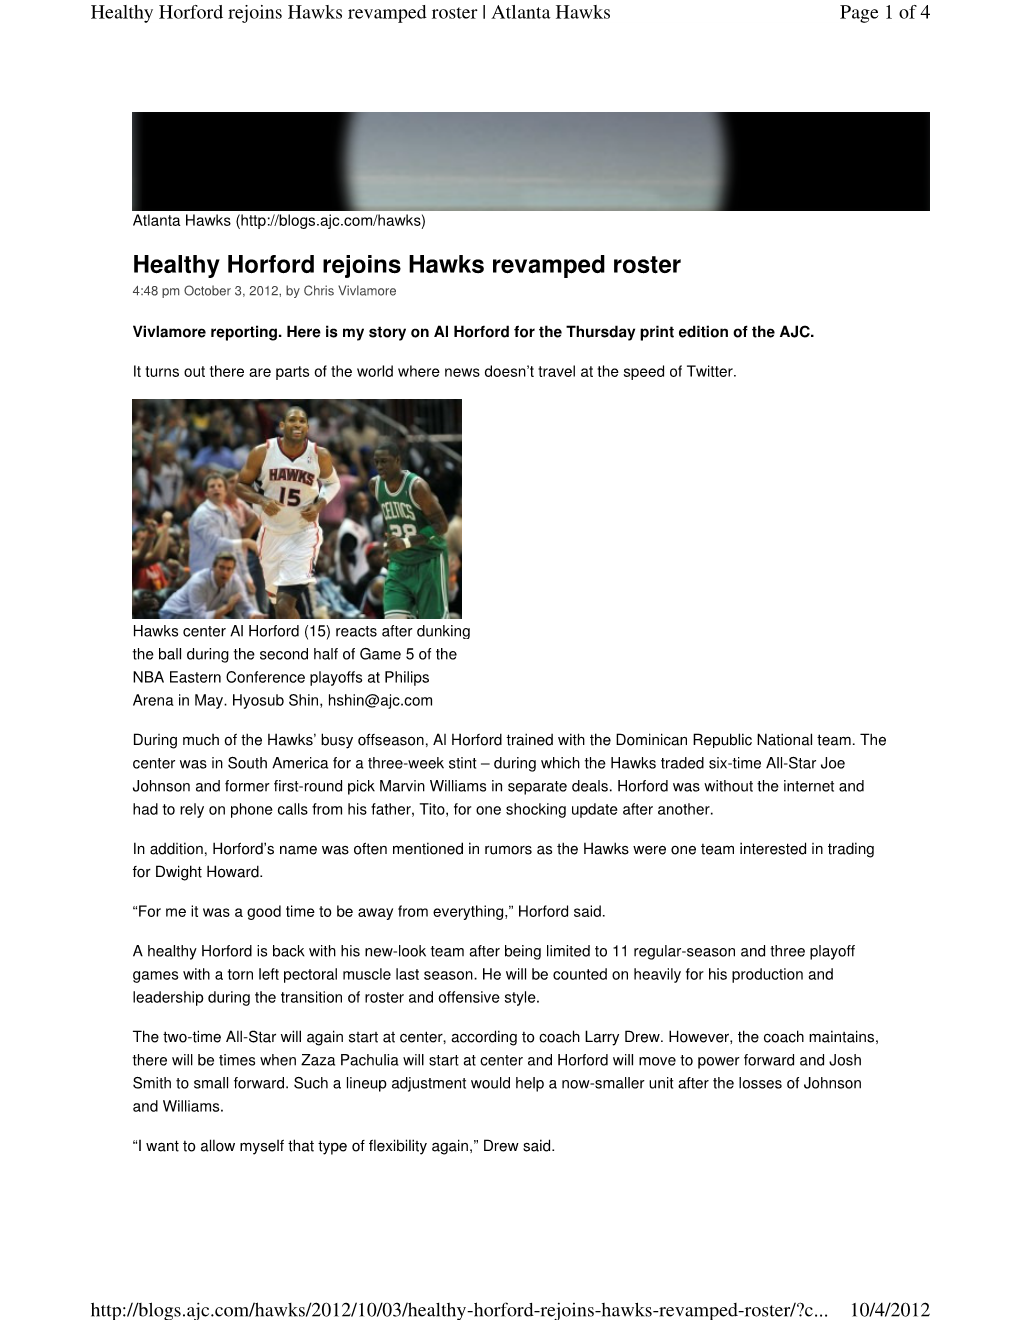 Healthy Horford Rejoins Hawks Revamped Roster | Atlanta Hawks Page 1 of 4